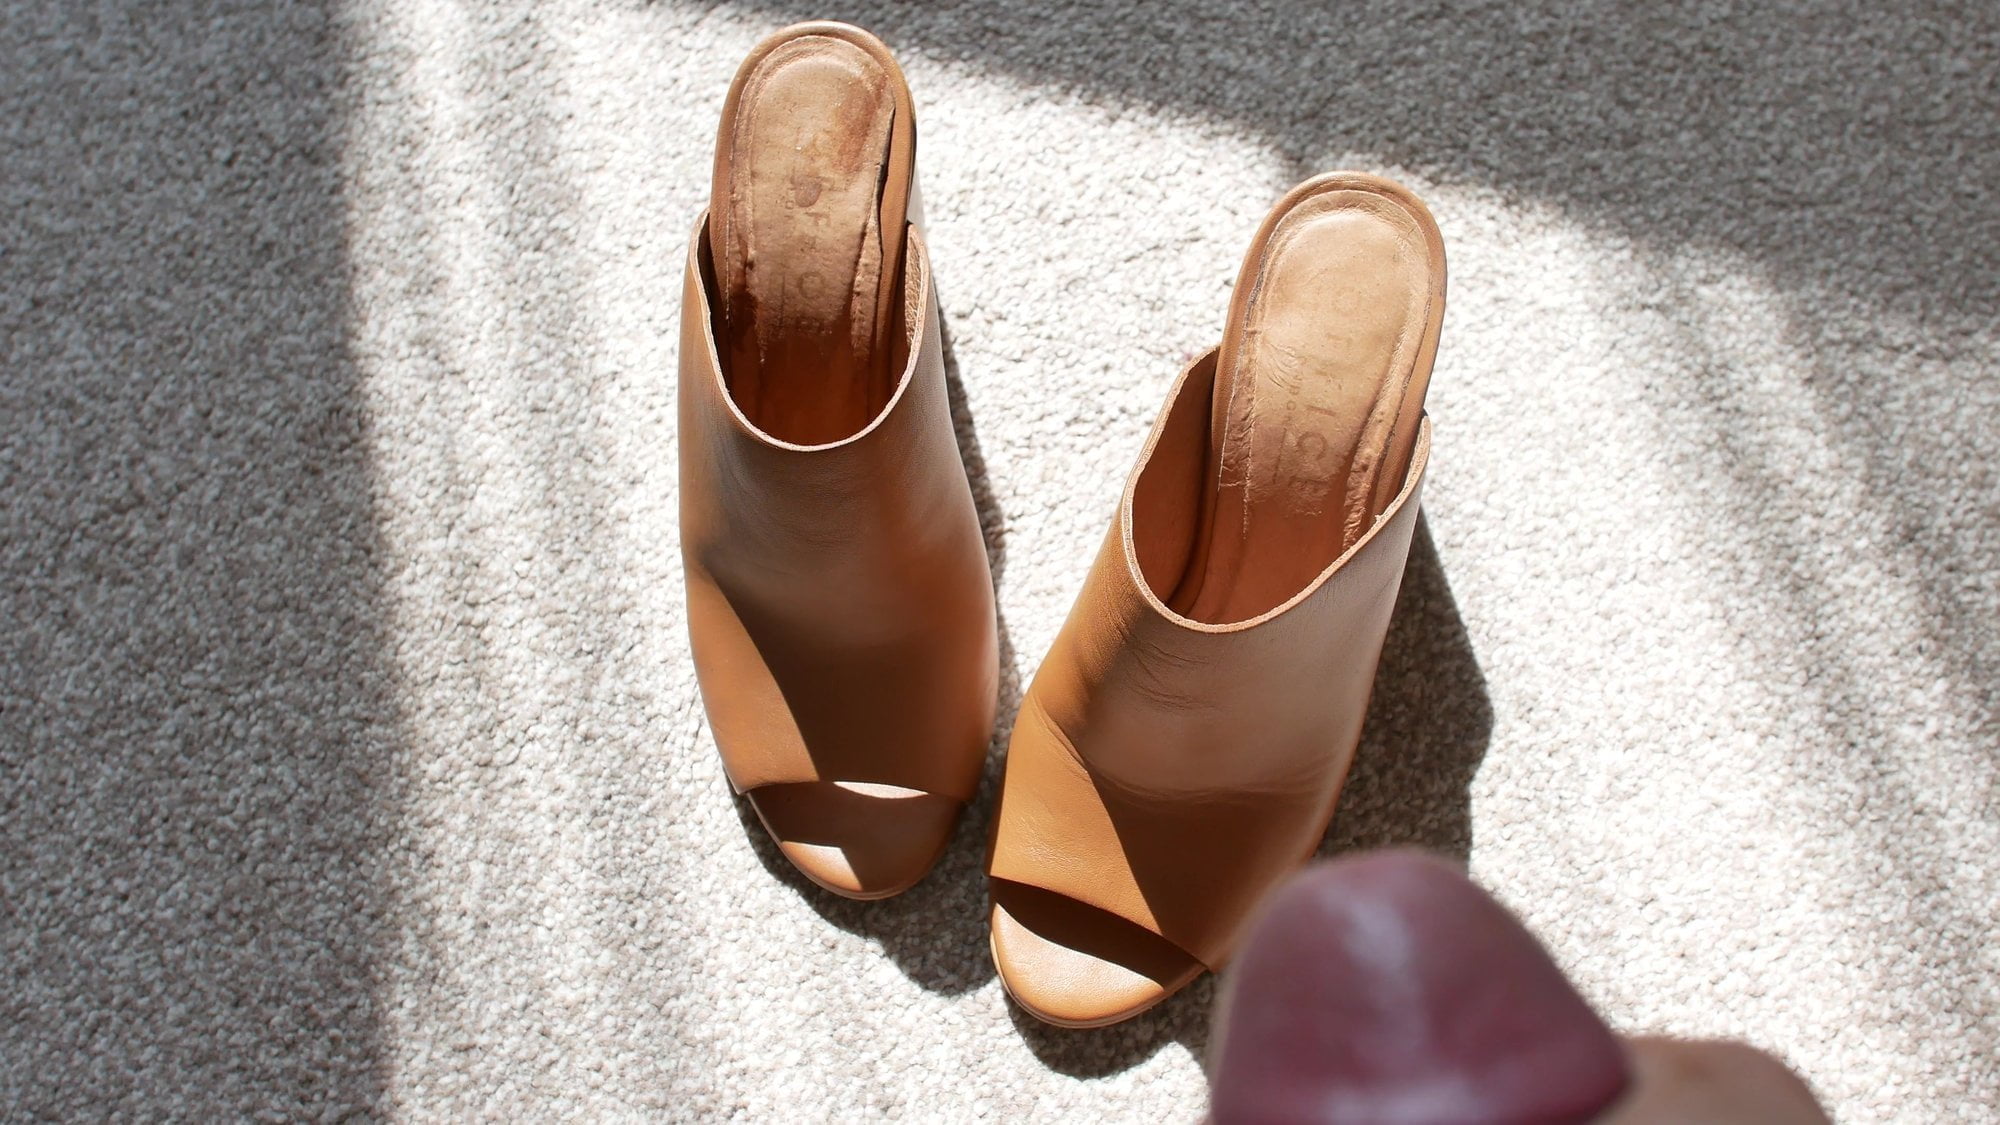 Cumming on Office 'Pose' tan leather 4-inch block heel mules